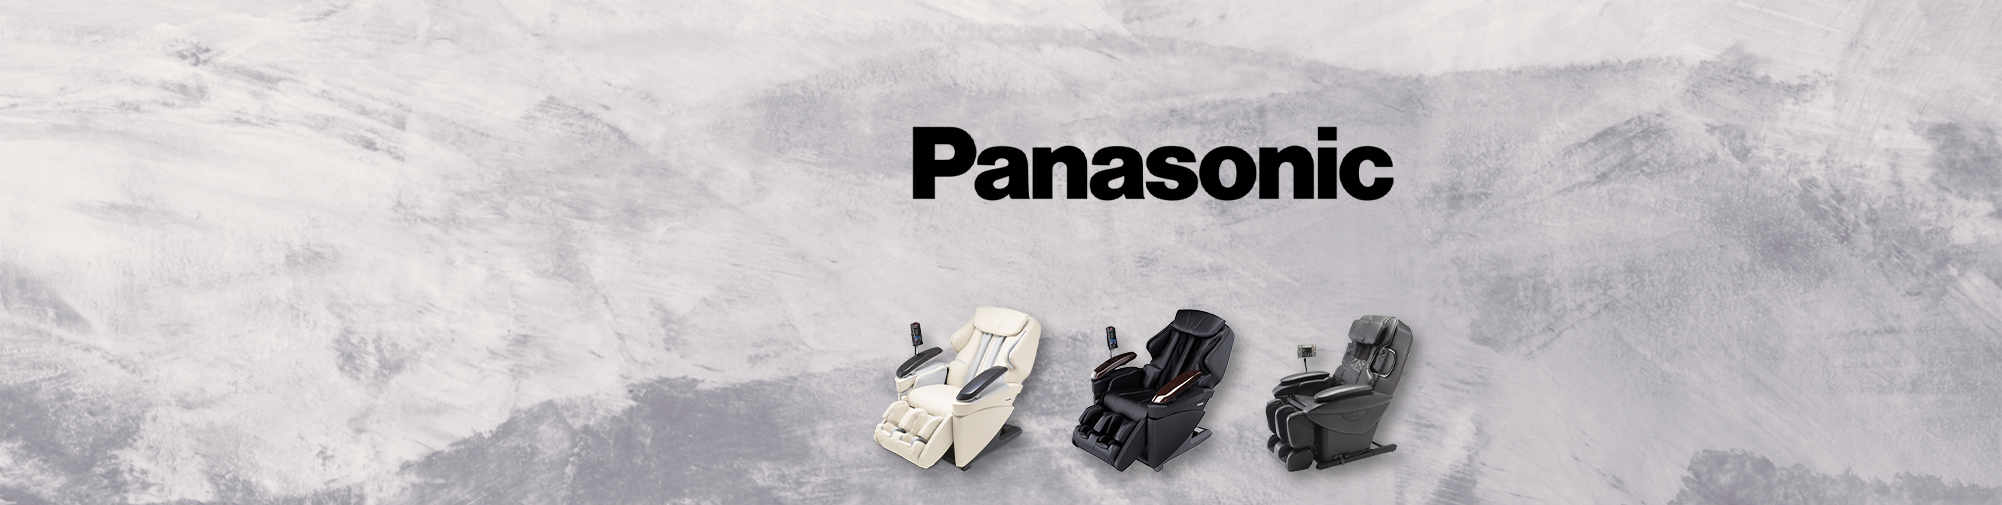 Panasonic masaža stolica-masaža stolica svijet